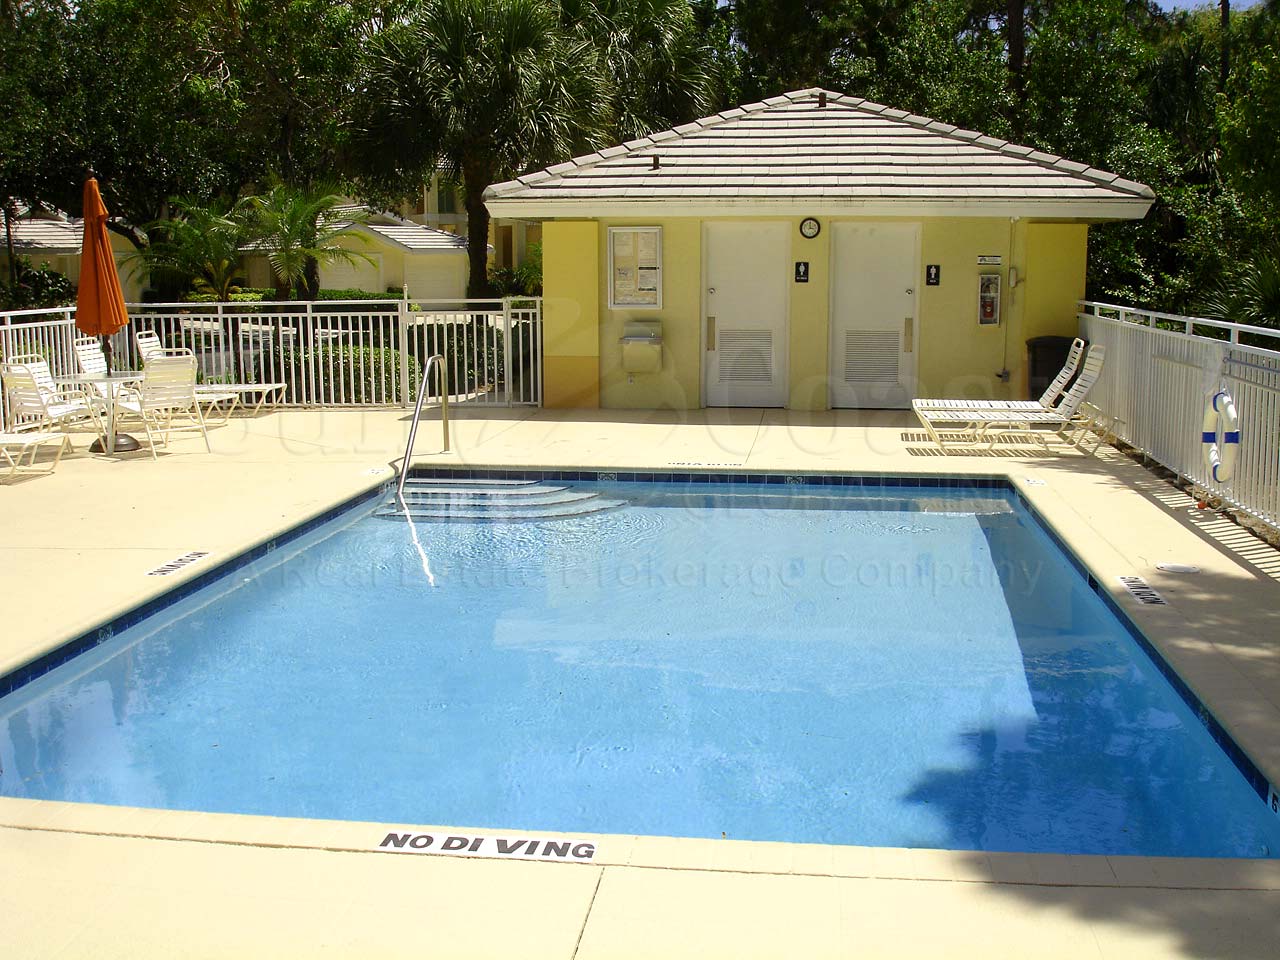 Barbados Community Pool